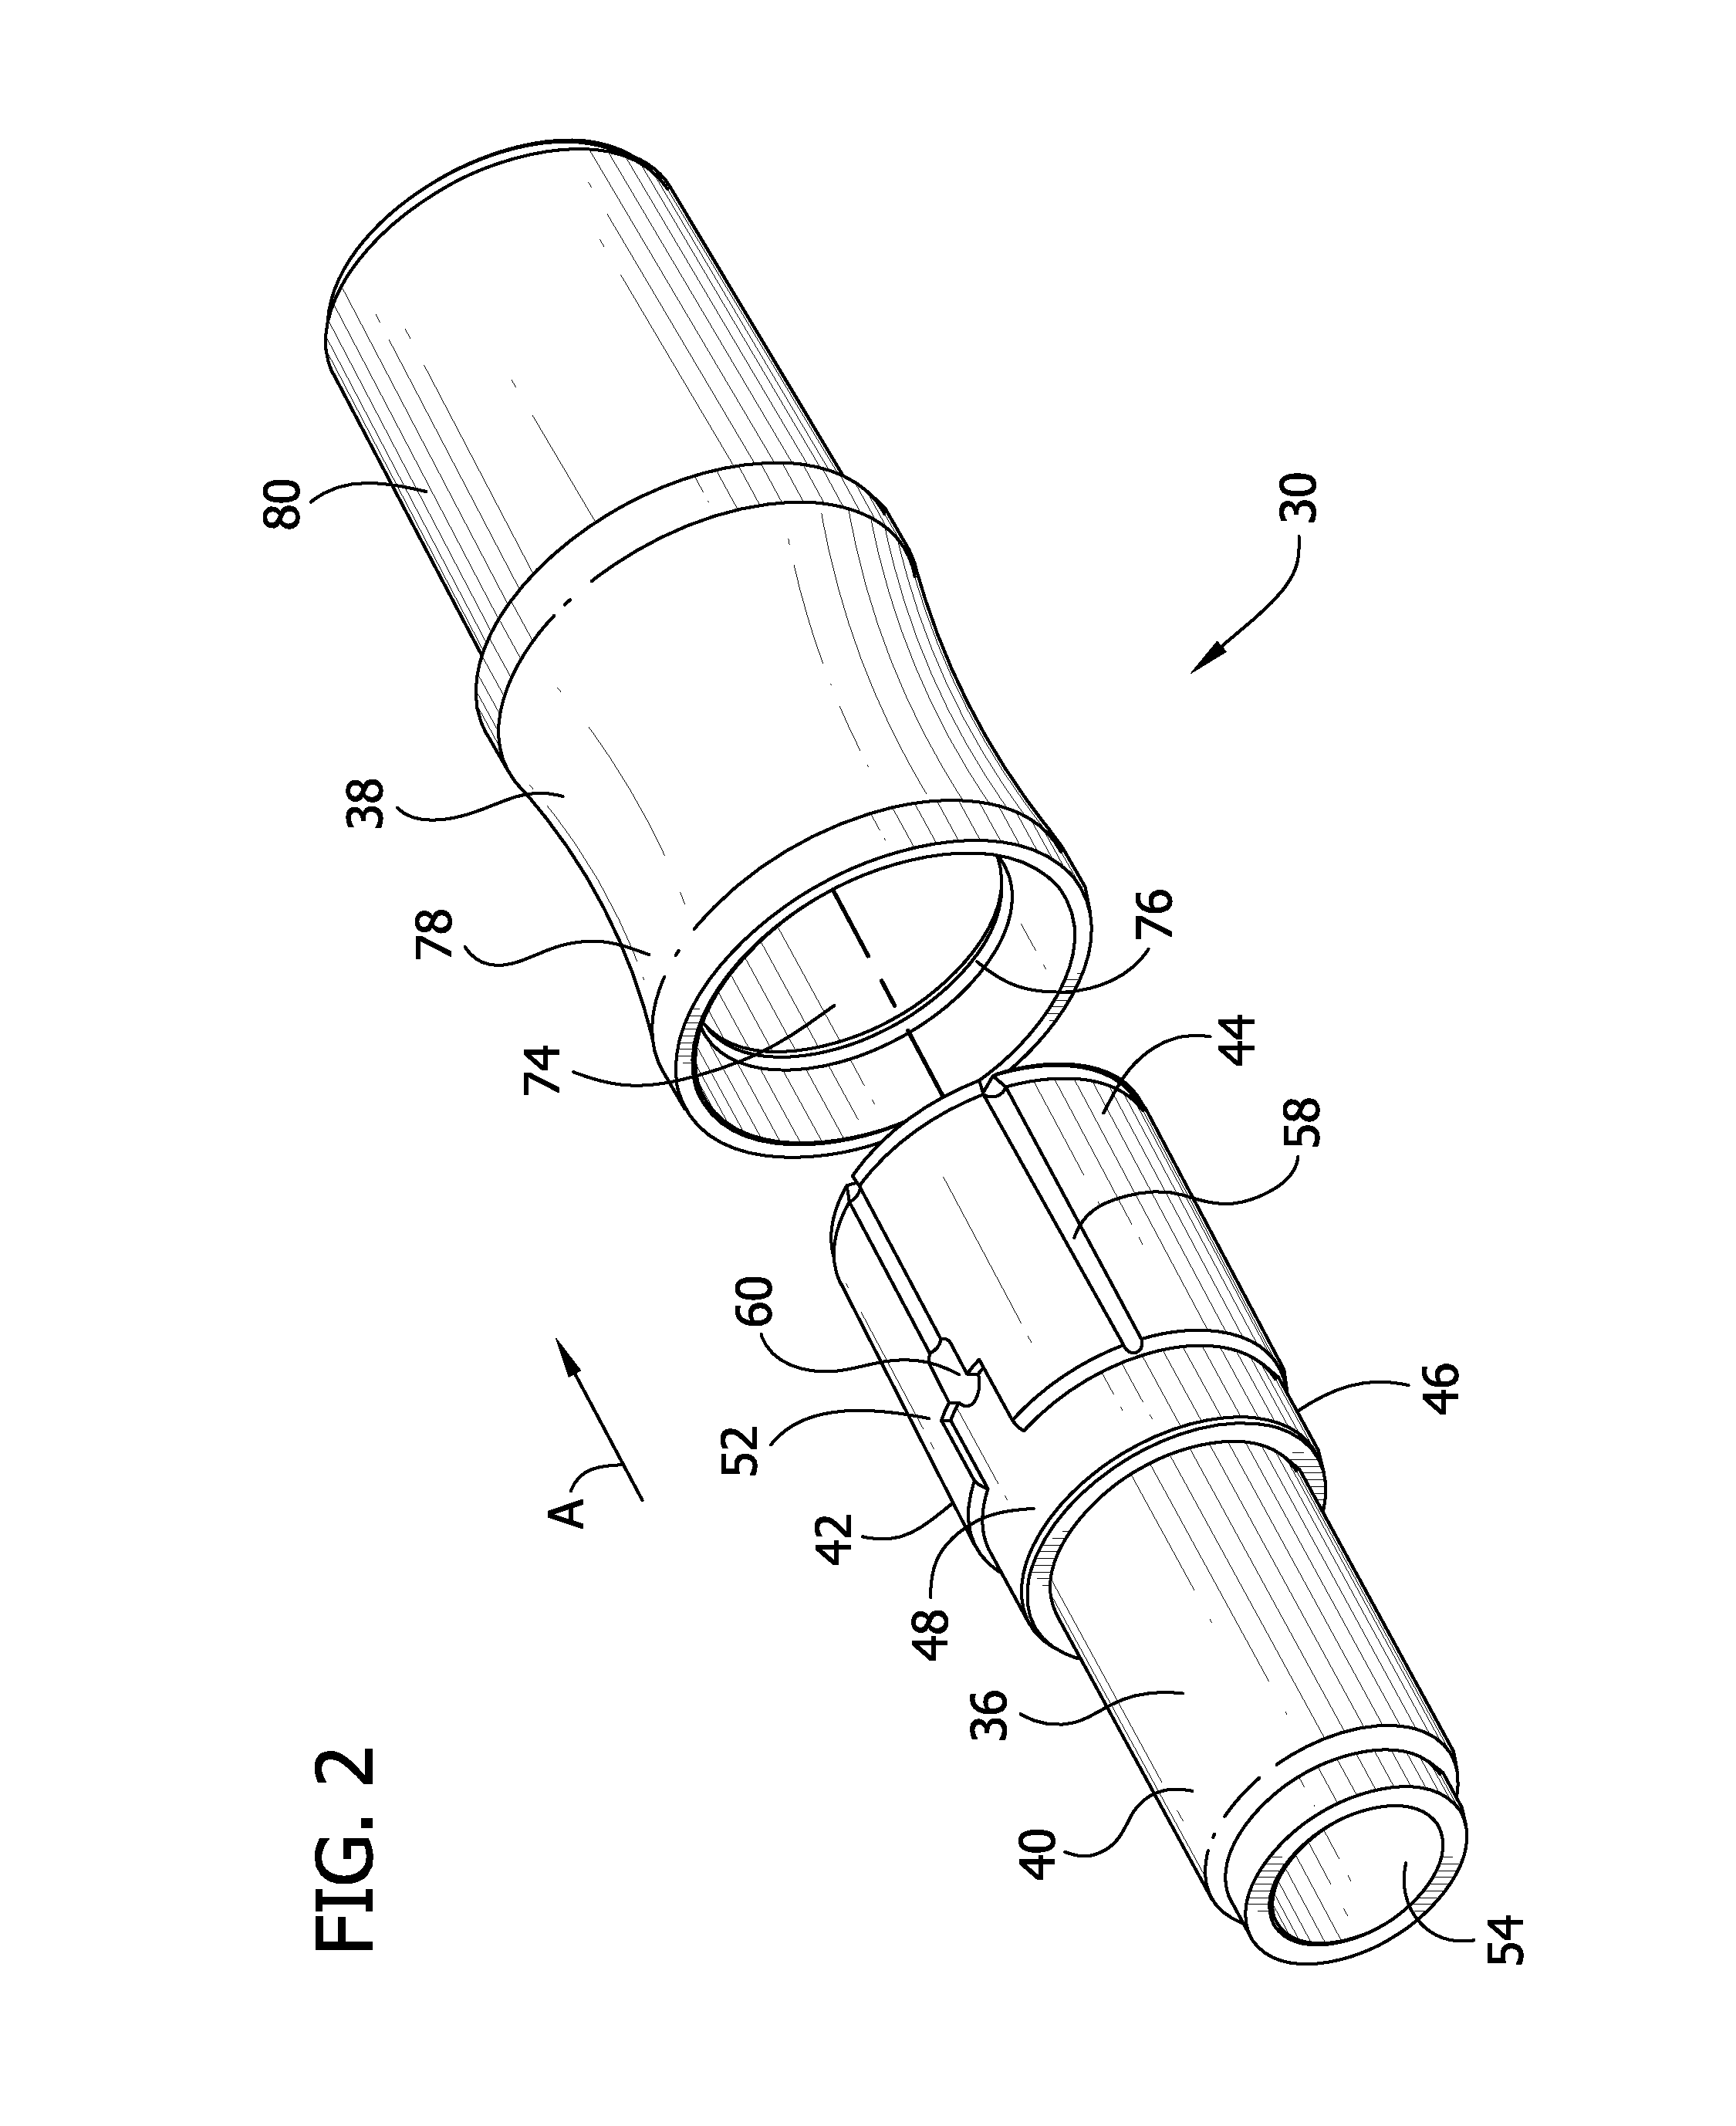 Safety connector apparatus